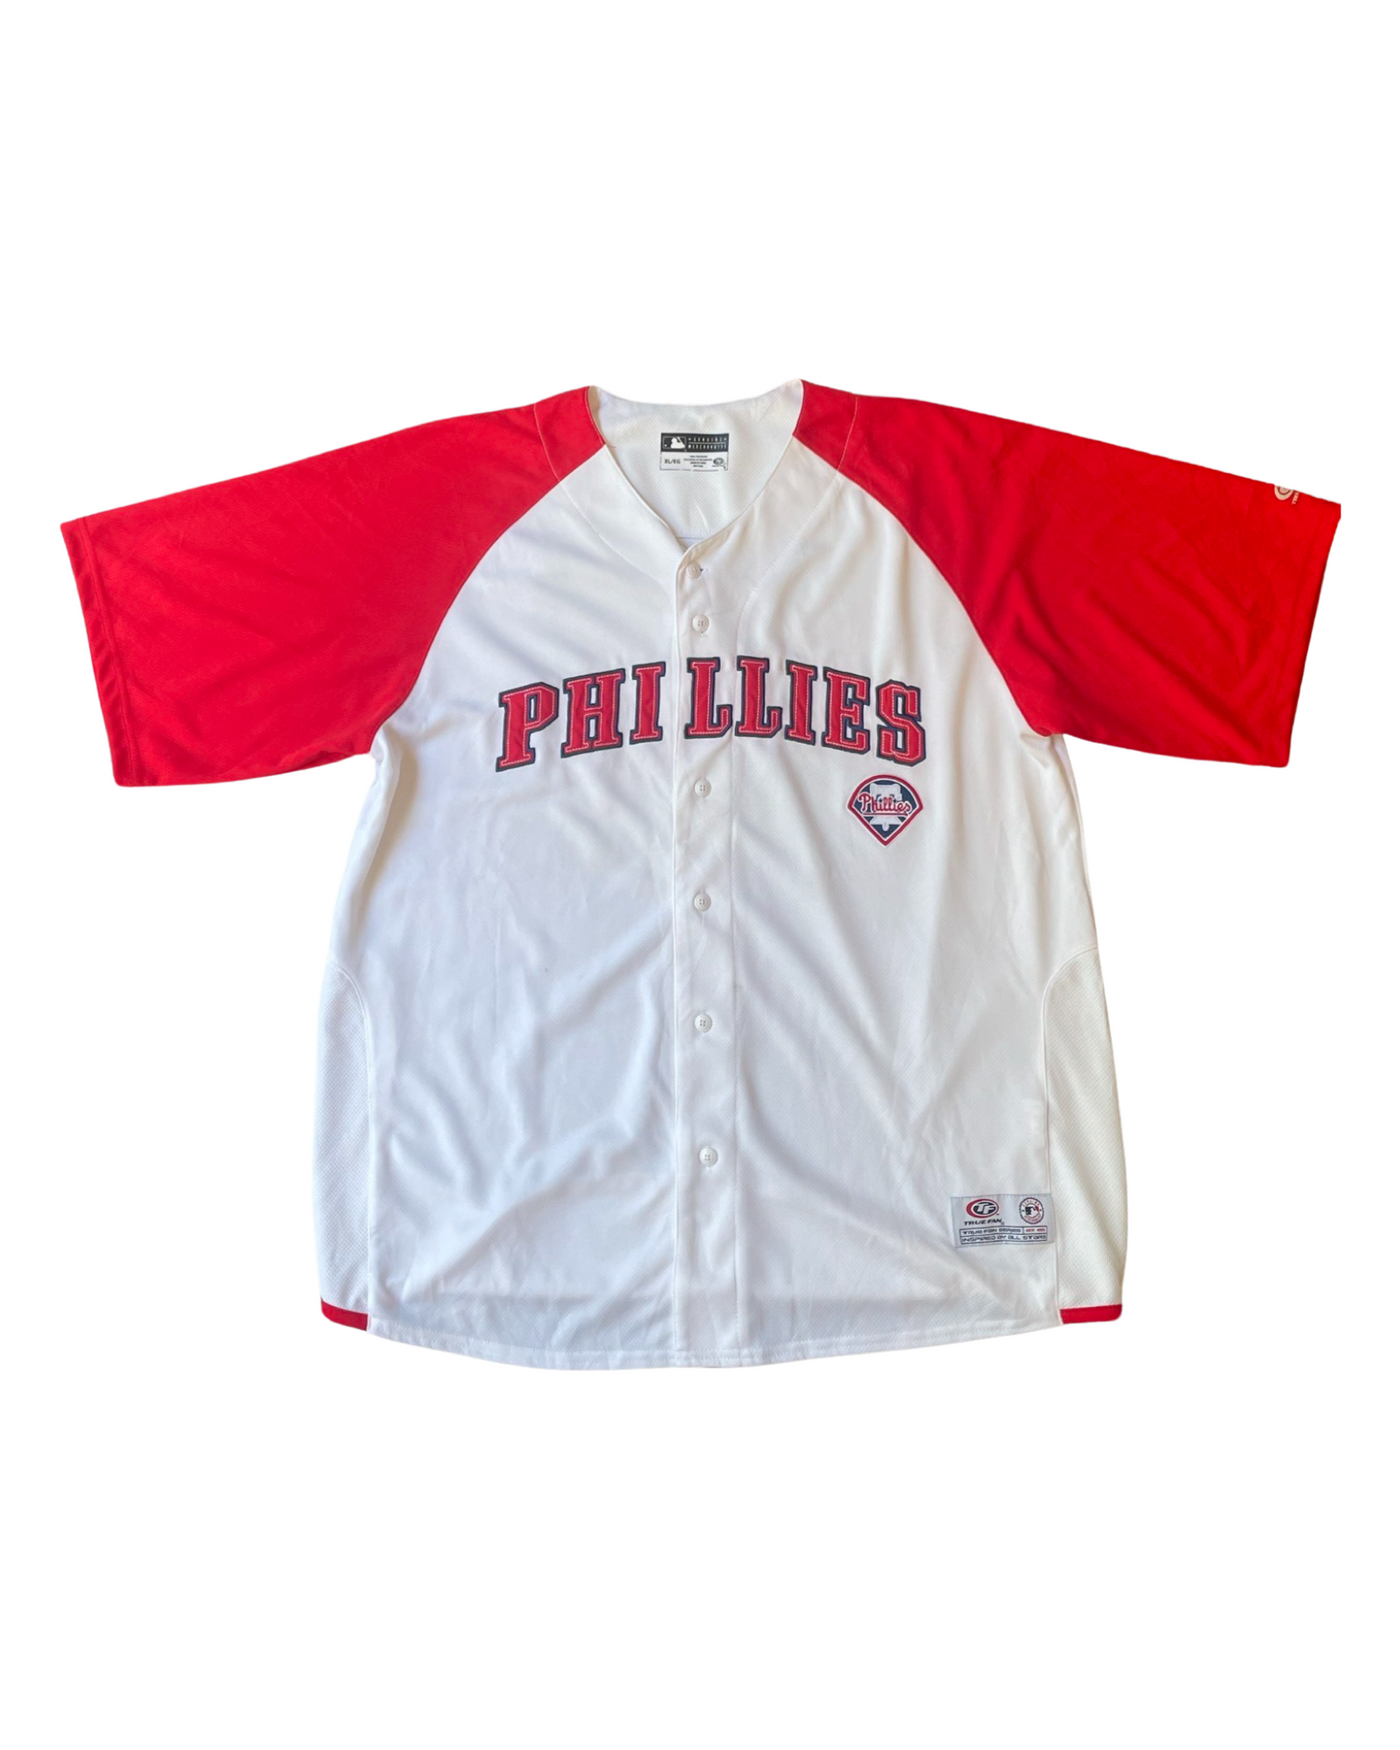 Vintage MBL Phillies Jersey Size XL